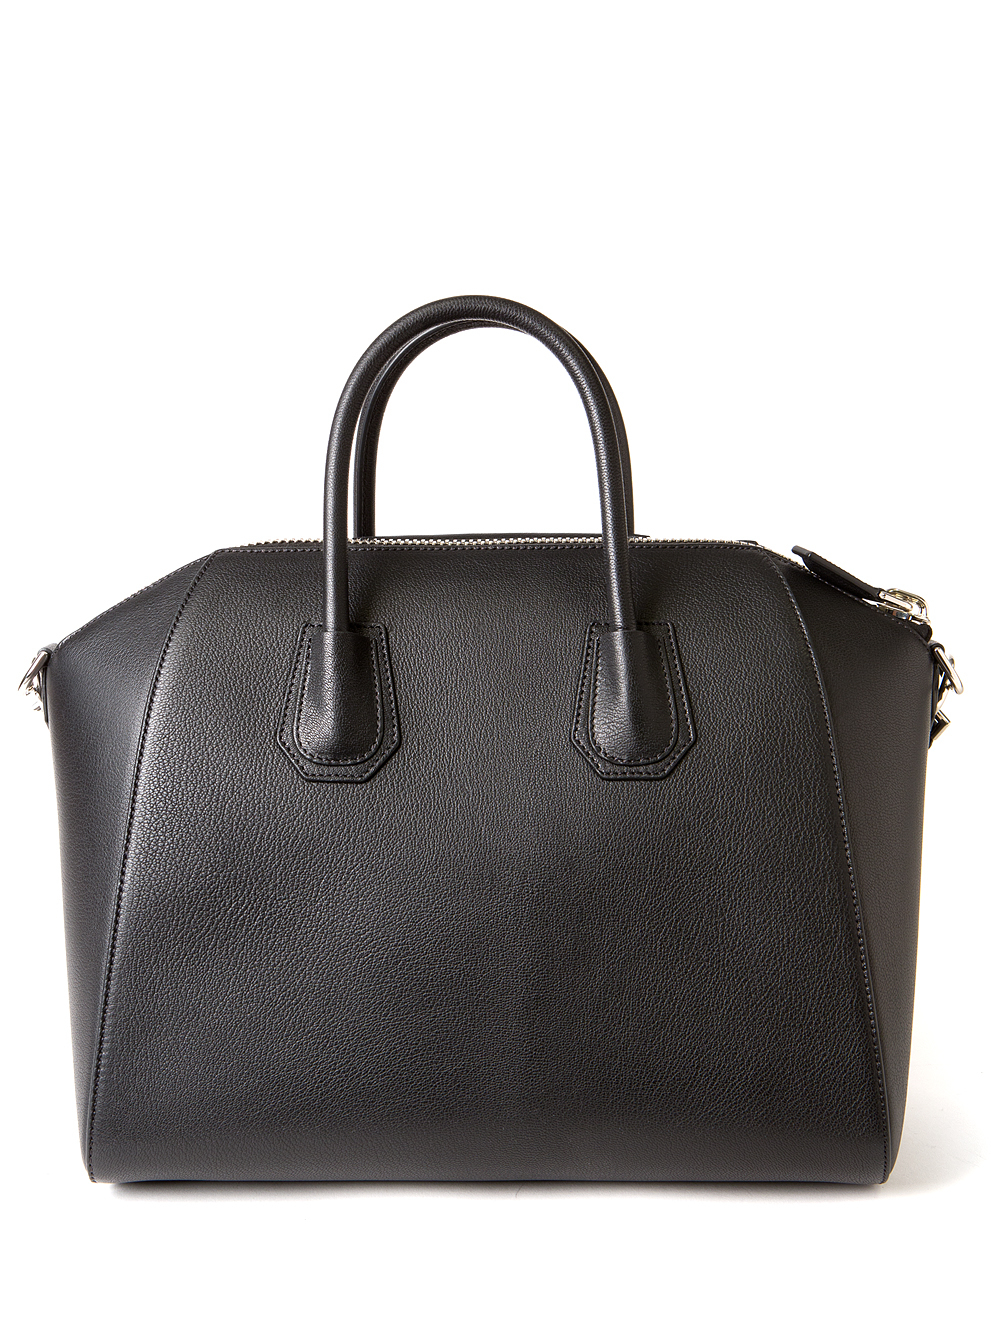 Lyst - Givenchy Medium Antigona Bag in Black